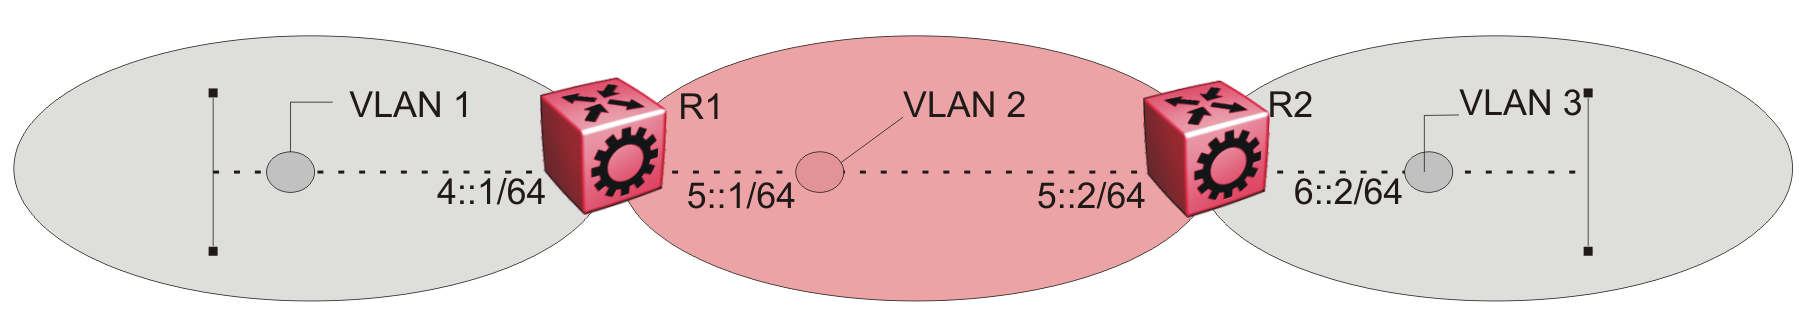 IPv6 routing between VLANs